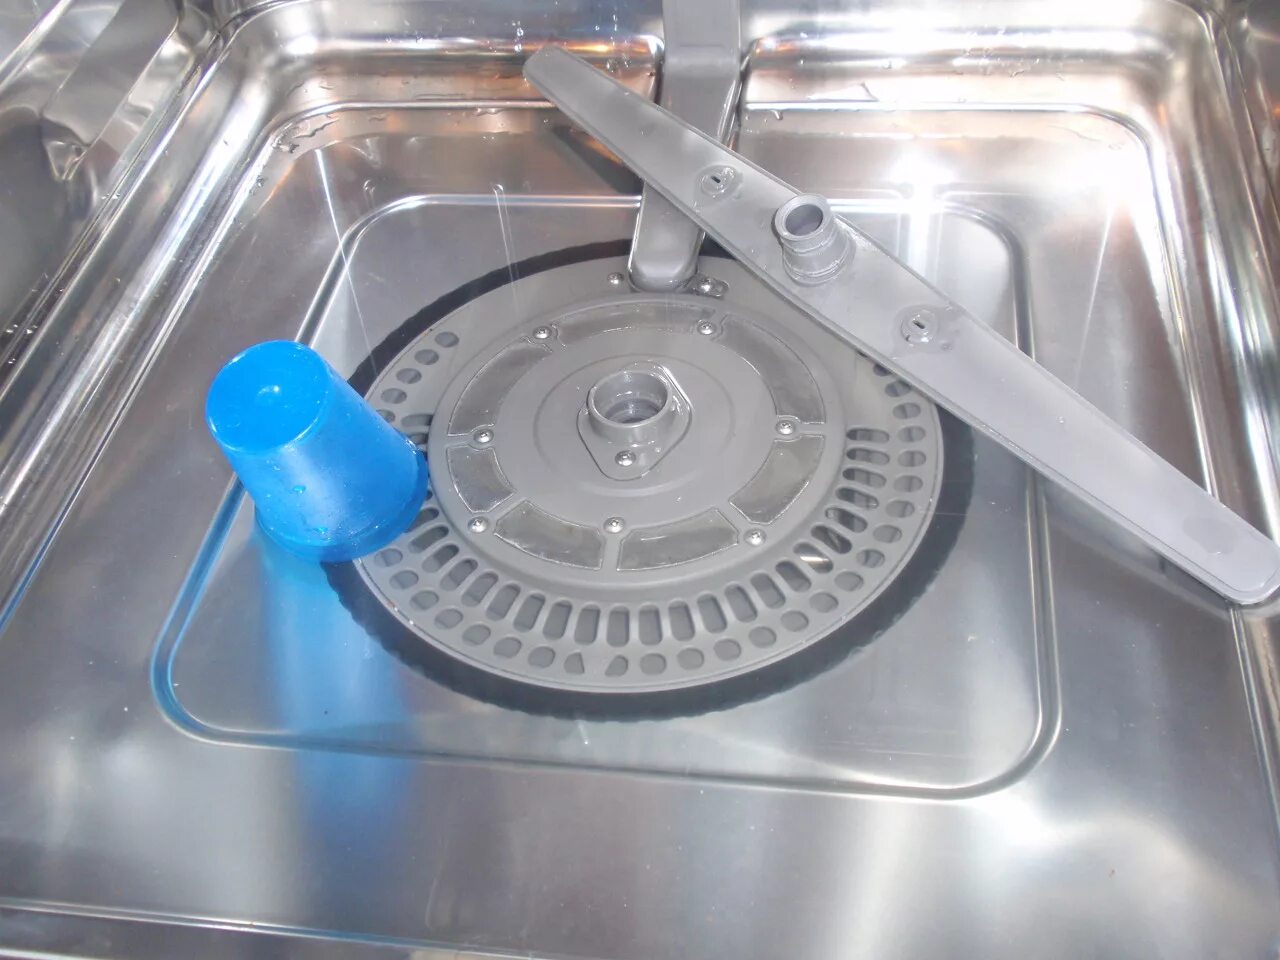 Dishwasher перевод. Посуда фирмы Microwave Dishwasher safe. Microwave Dishwasher safe -30 110 с. Proton w7ddn Dishwasher. Terracotta microweve dish Washer over safe.